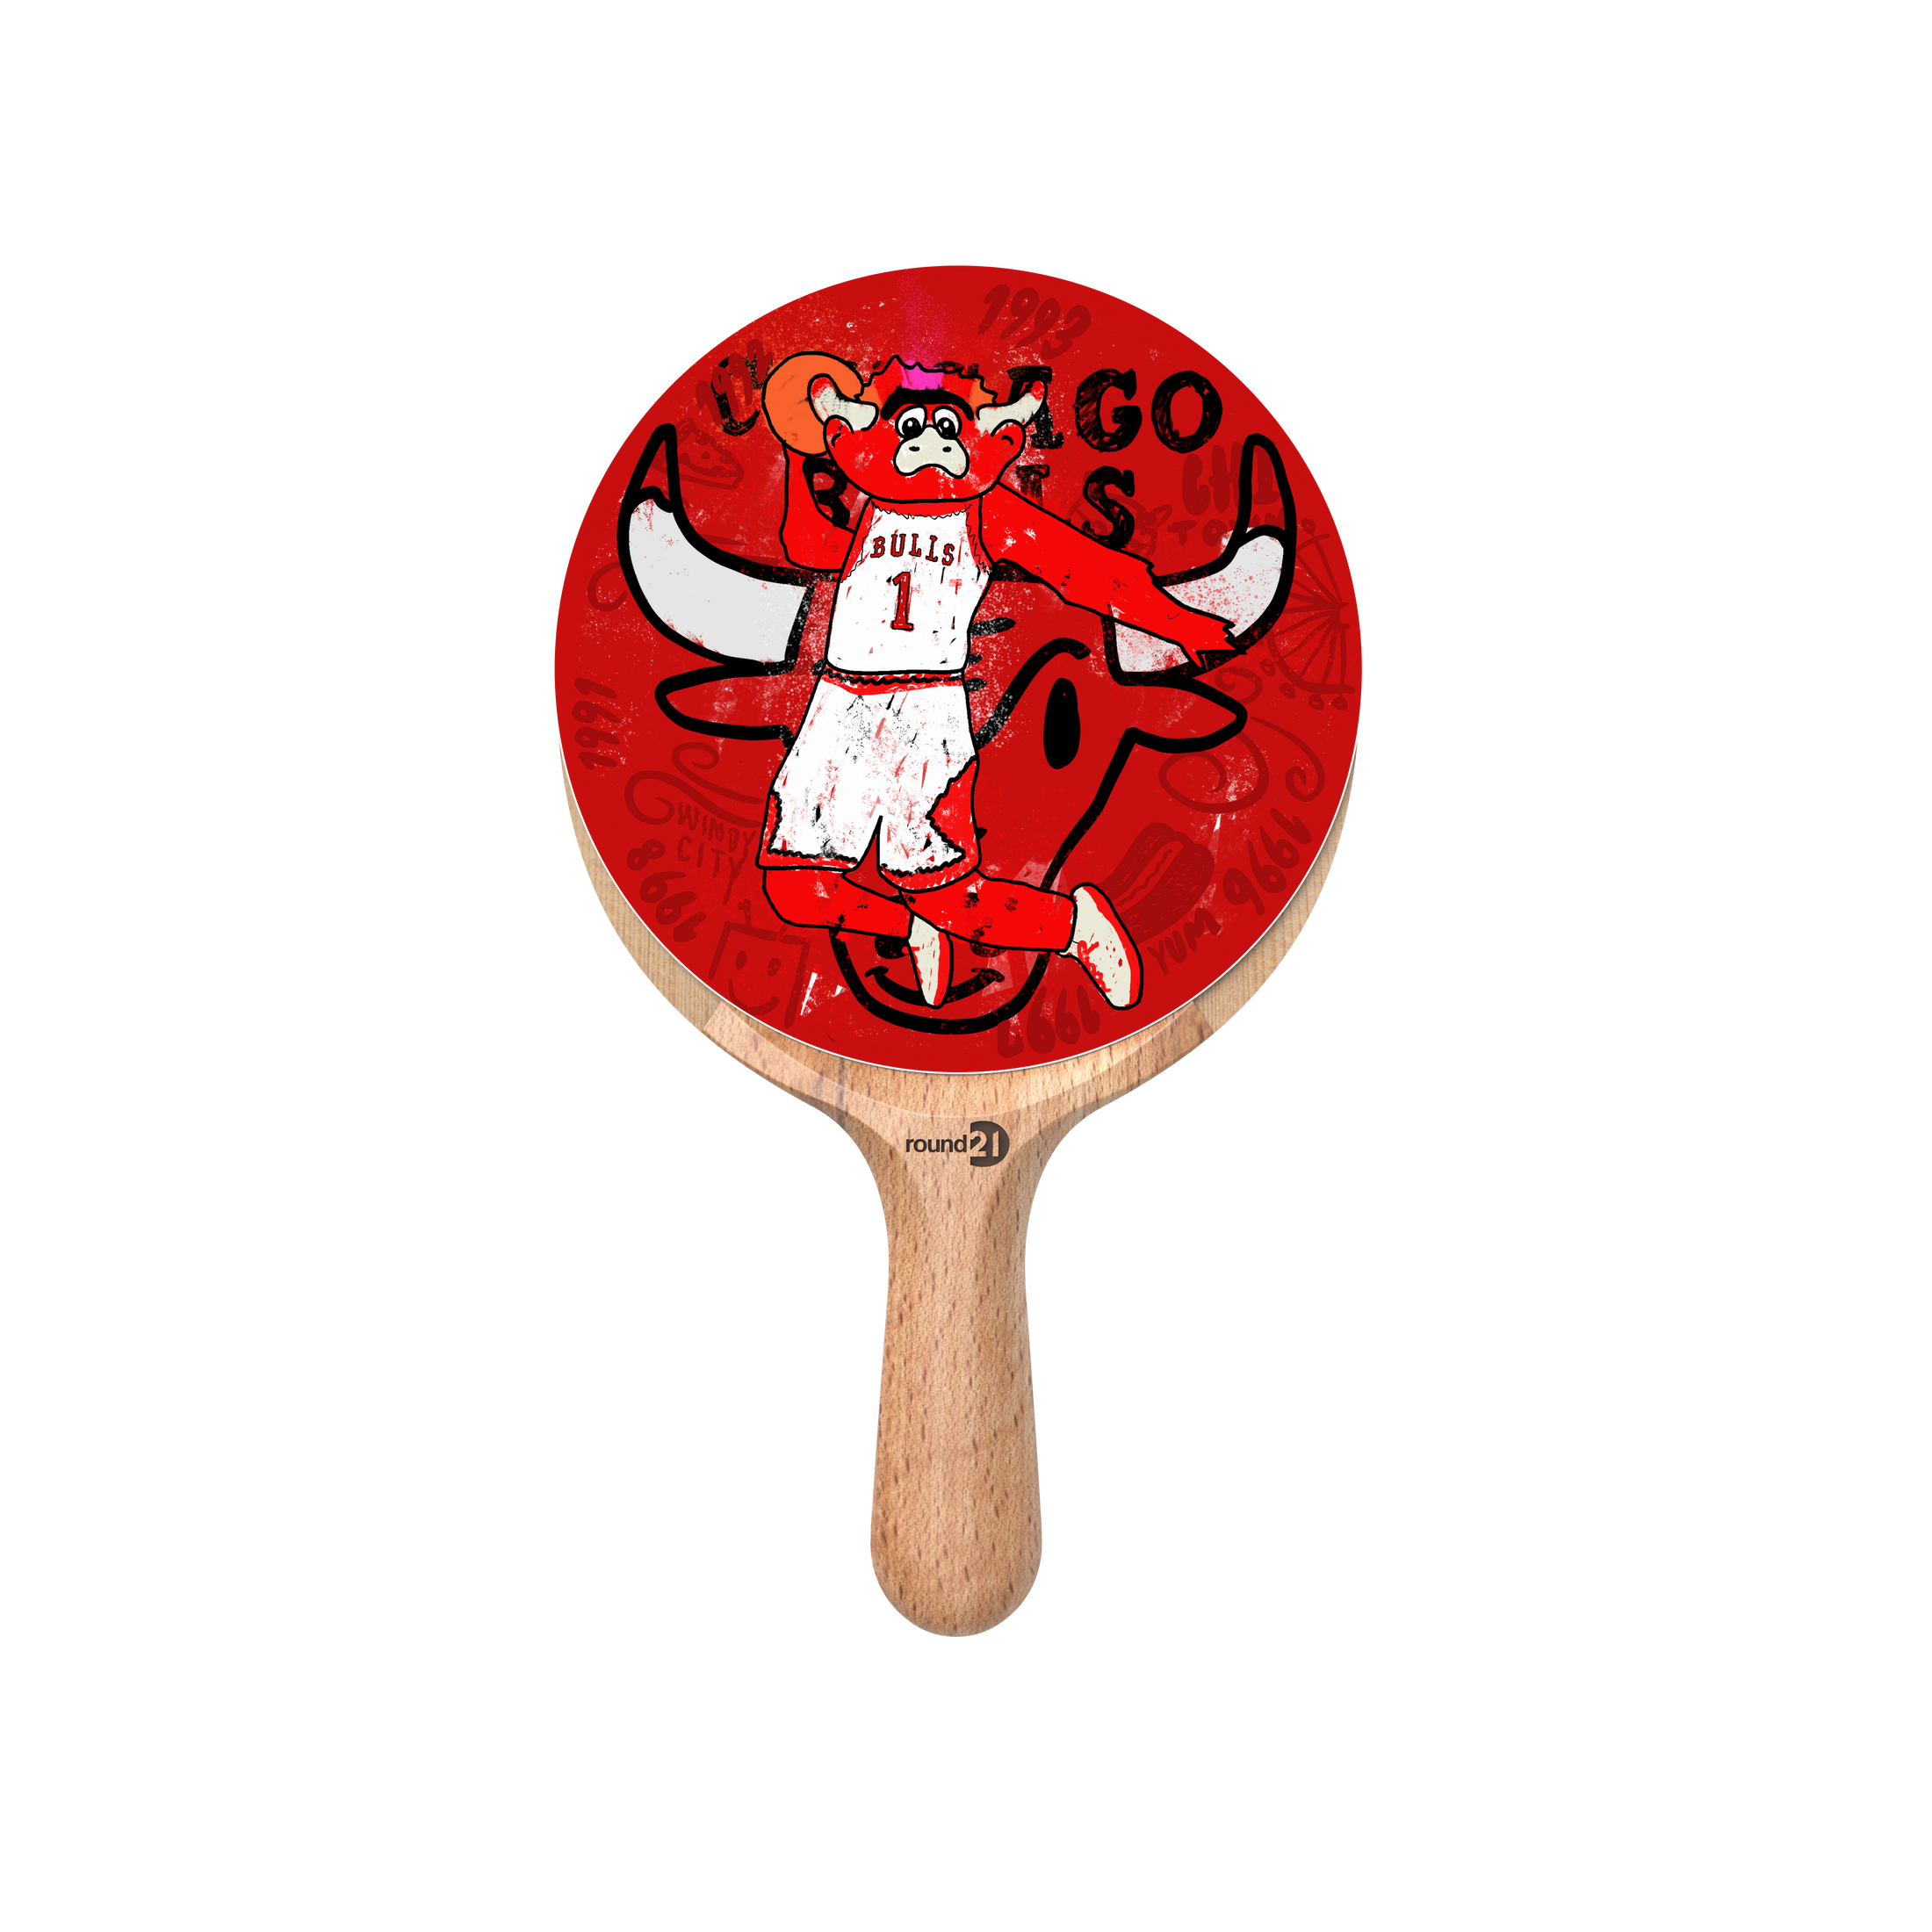 Chicago Bulls paddle